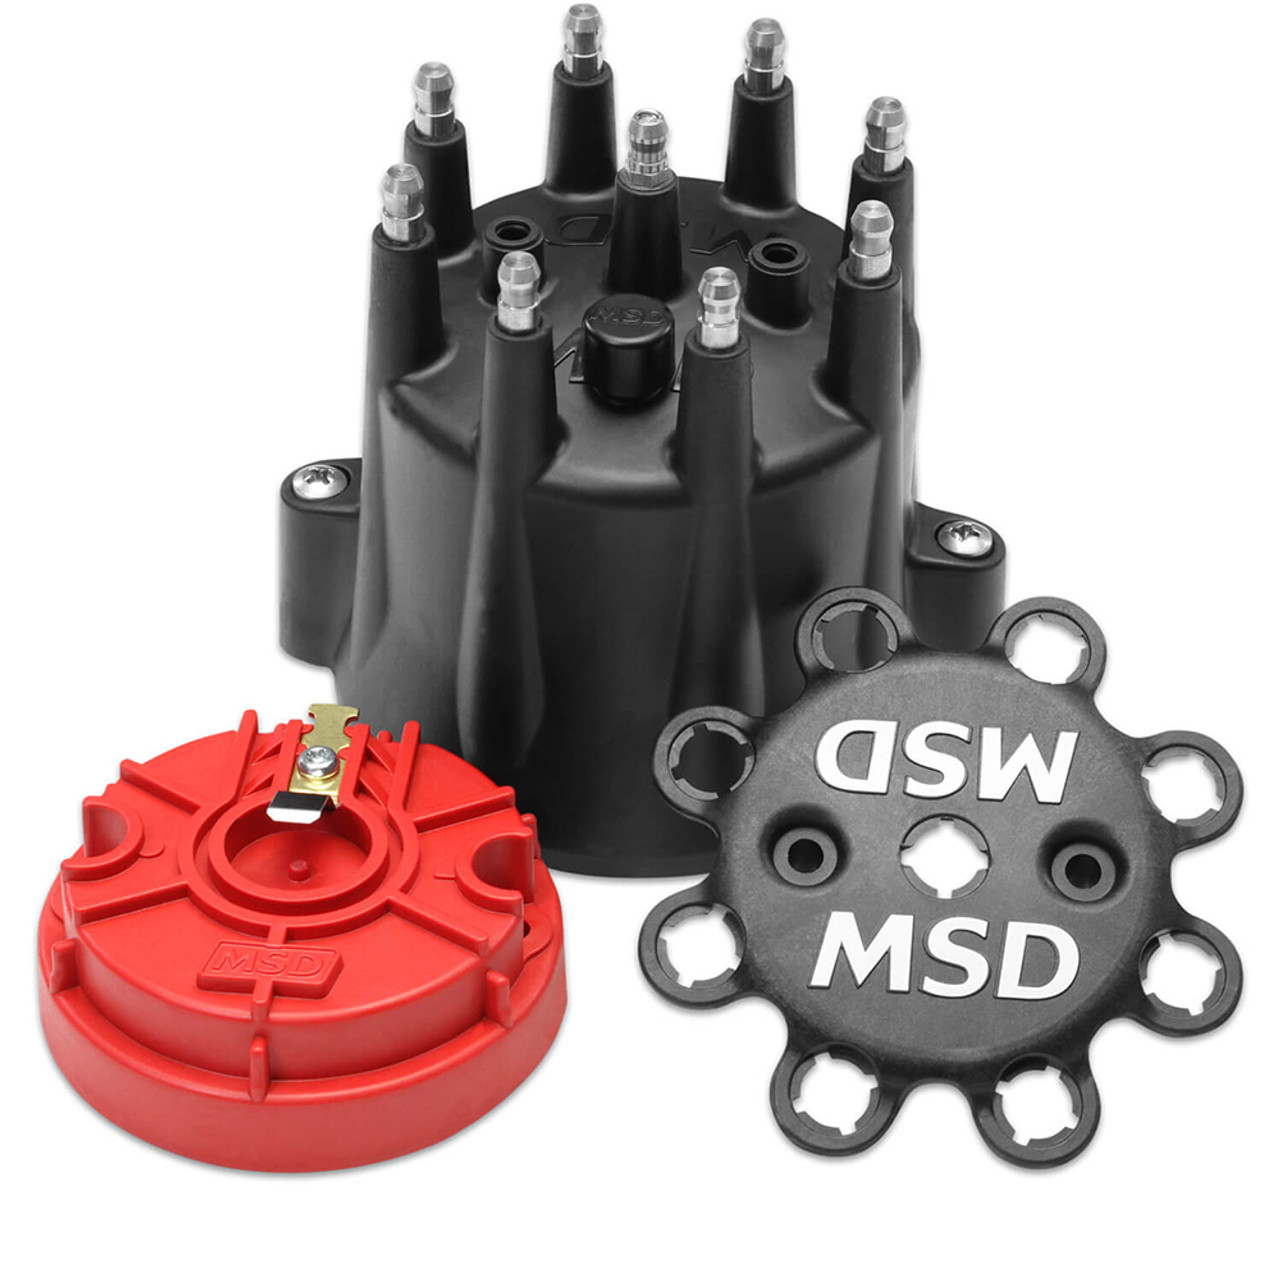 MSD Ignition Distributor Cap & Rotor Kit Chevy V8 HEI Black